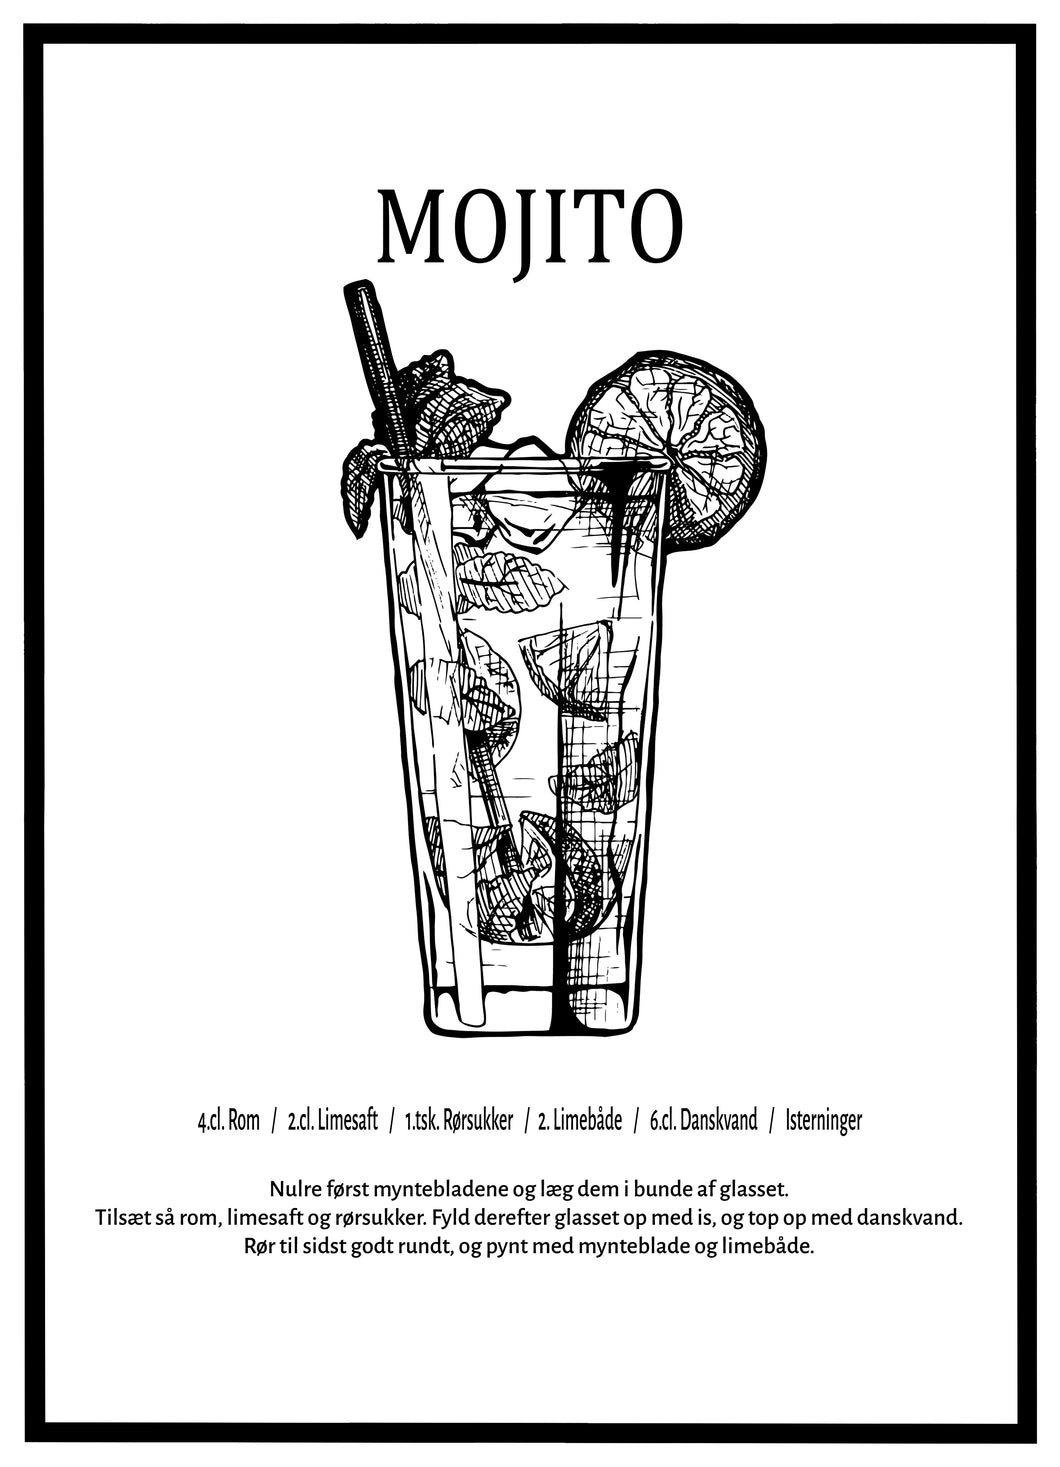 Mojito - Plakat